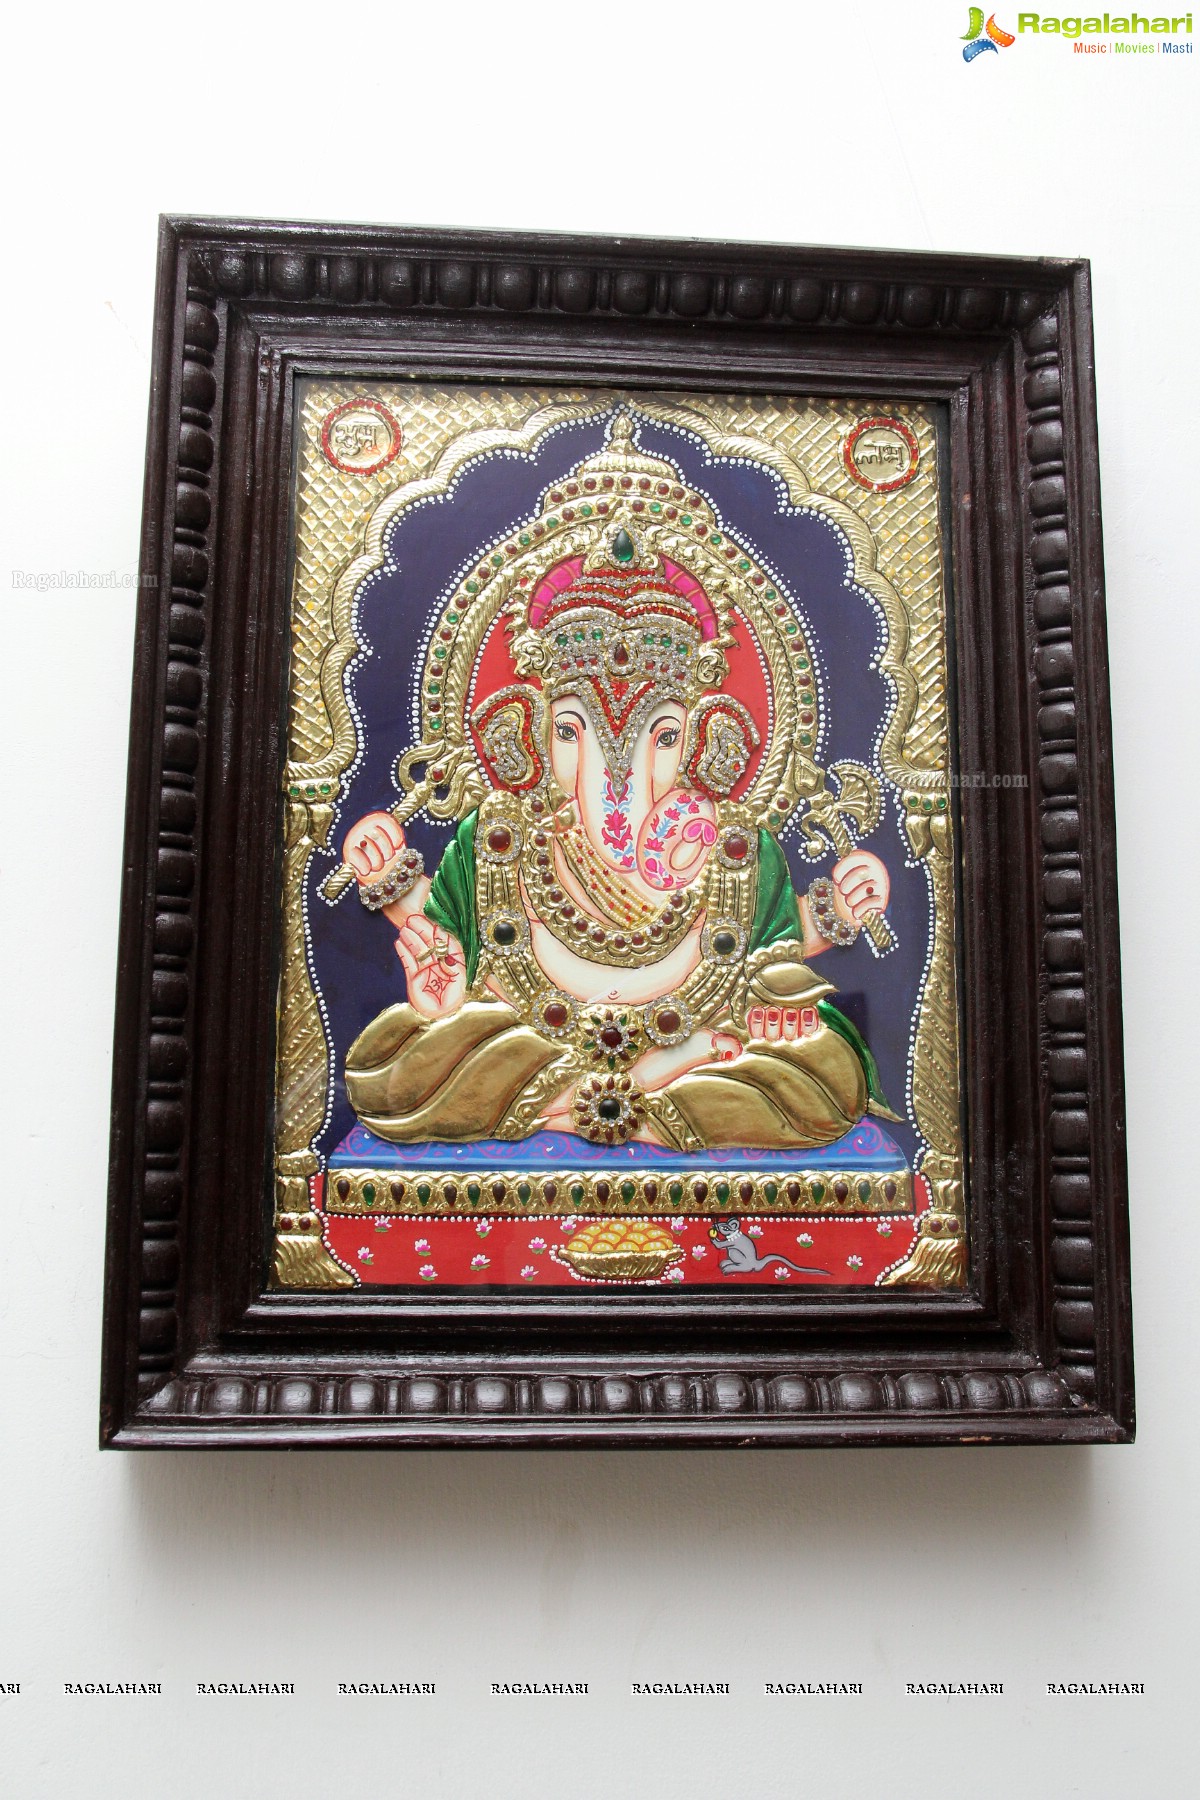 Chitramayee - 108 Ganesha Art Exhibition at State Art Gallery, Hyderabad